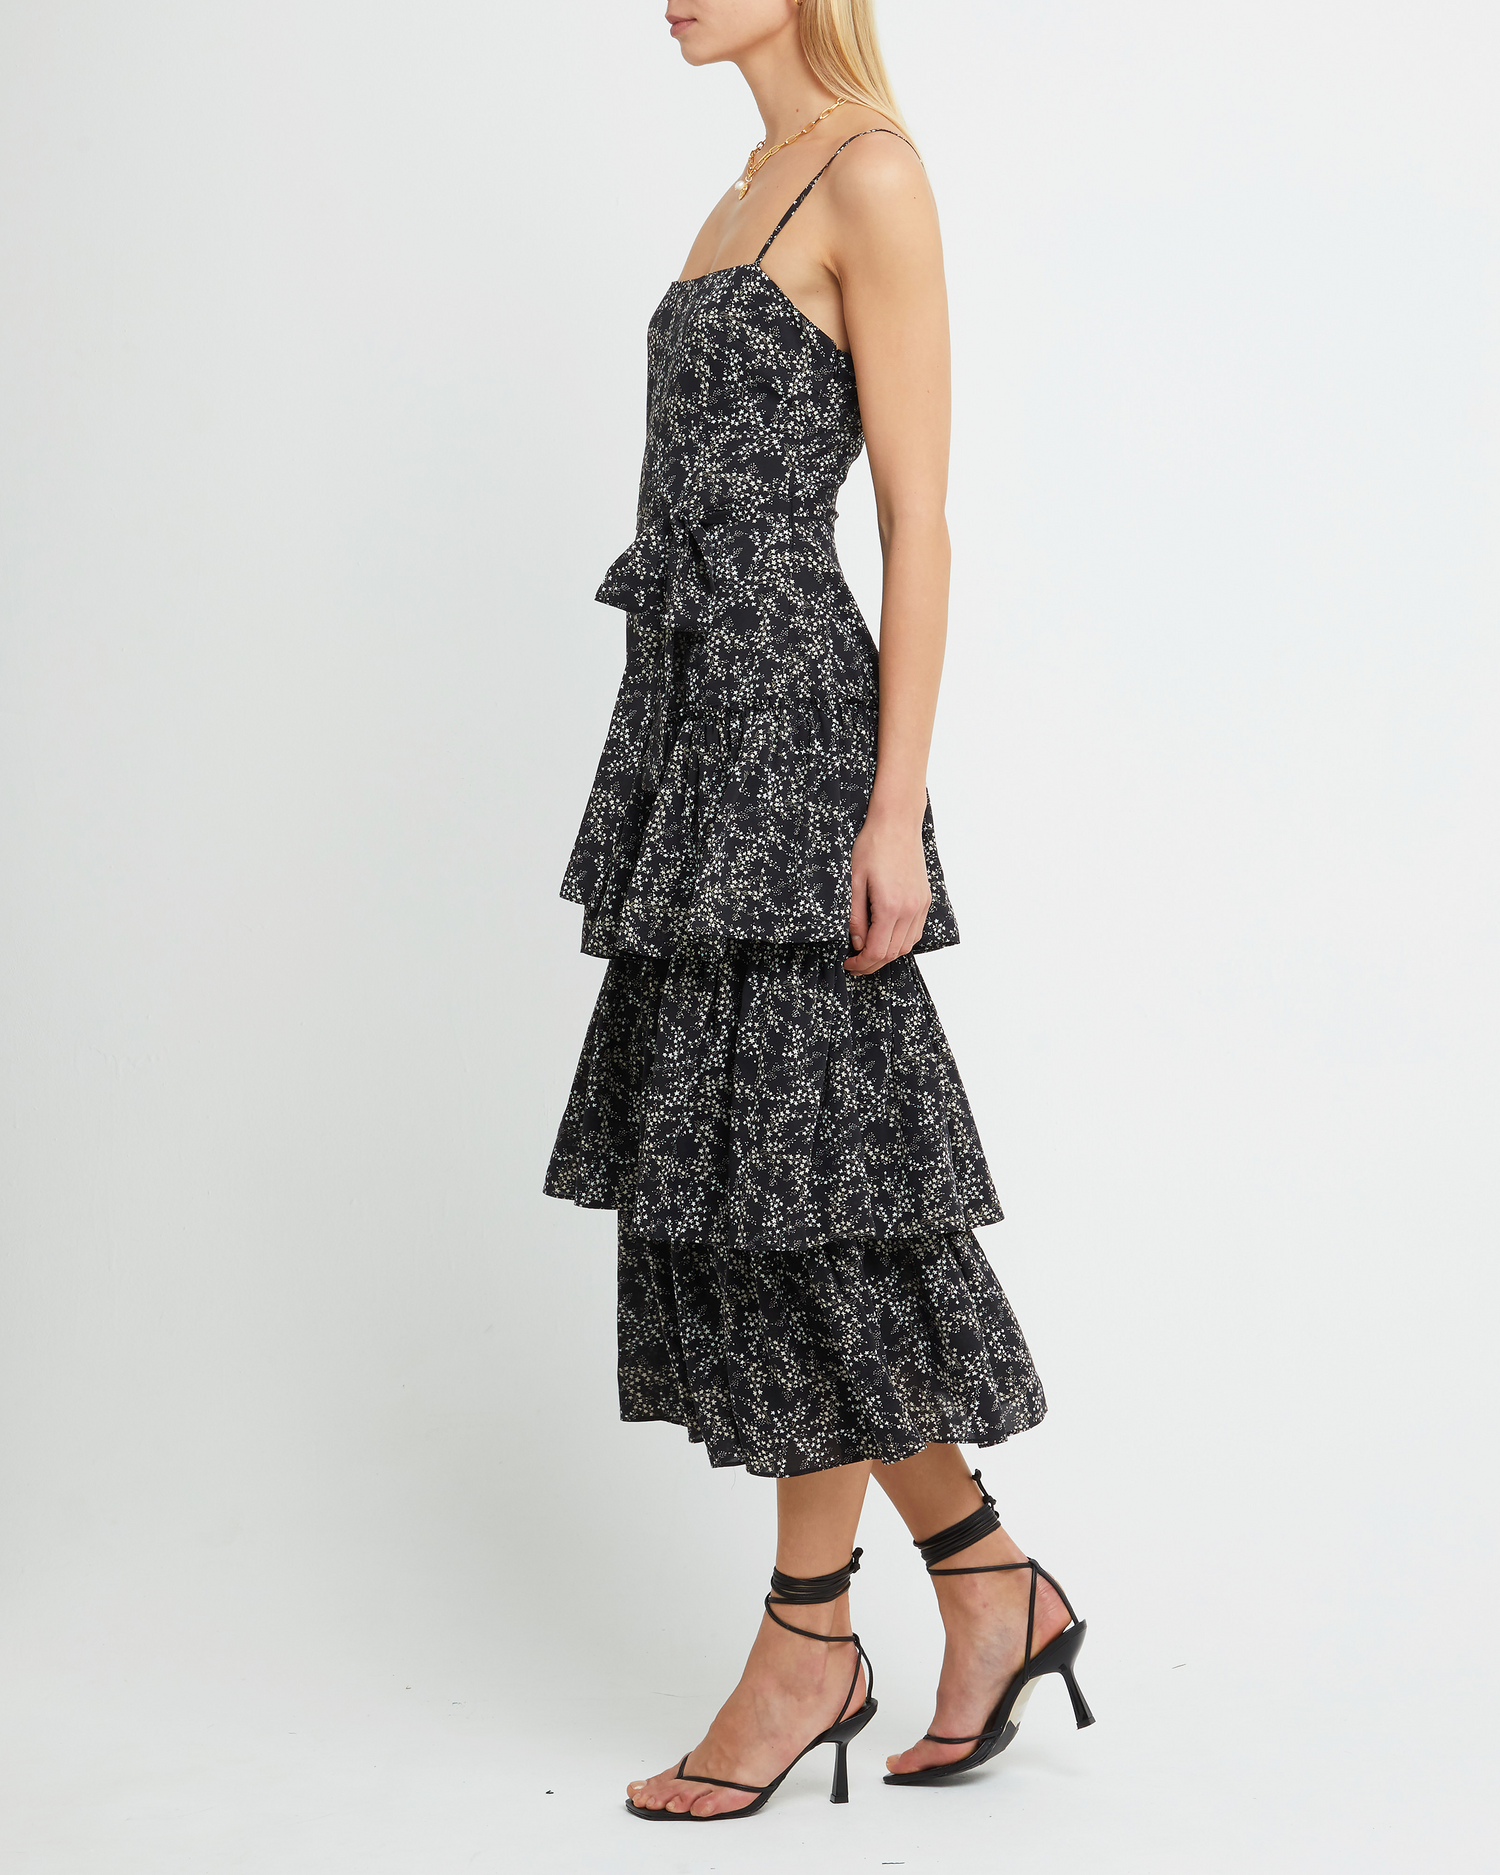 Fifth image of Nadira Dress, a black midi dress, tiered skirt, floral, spaghetti straps, cami